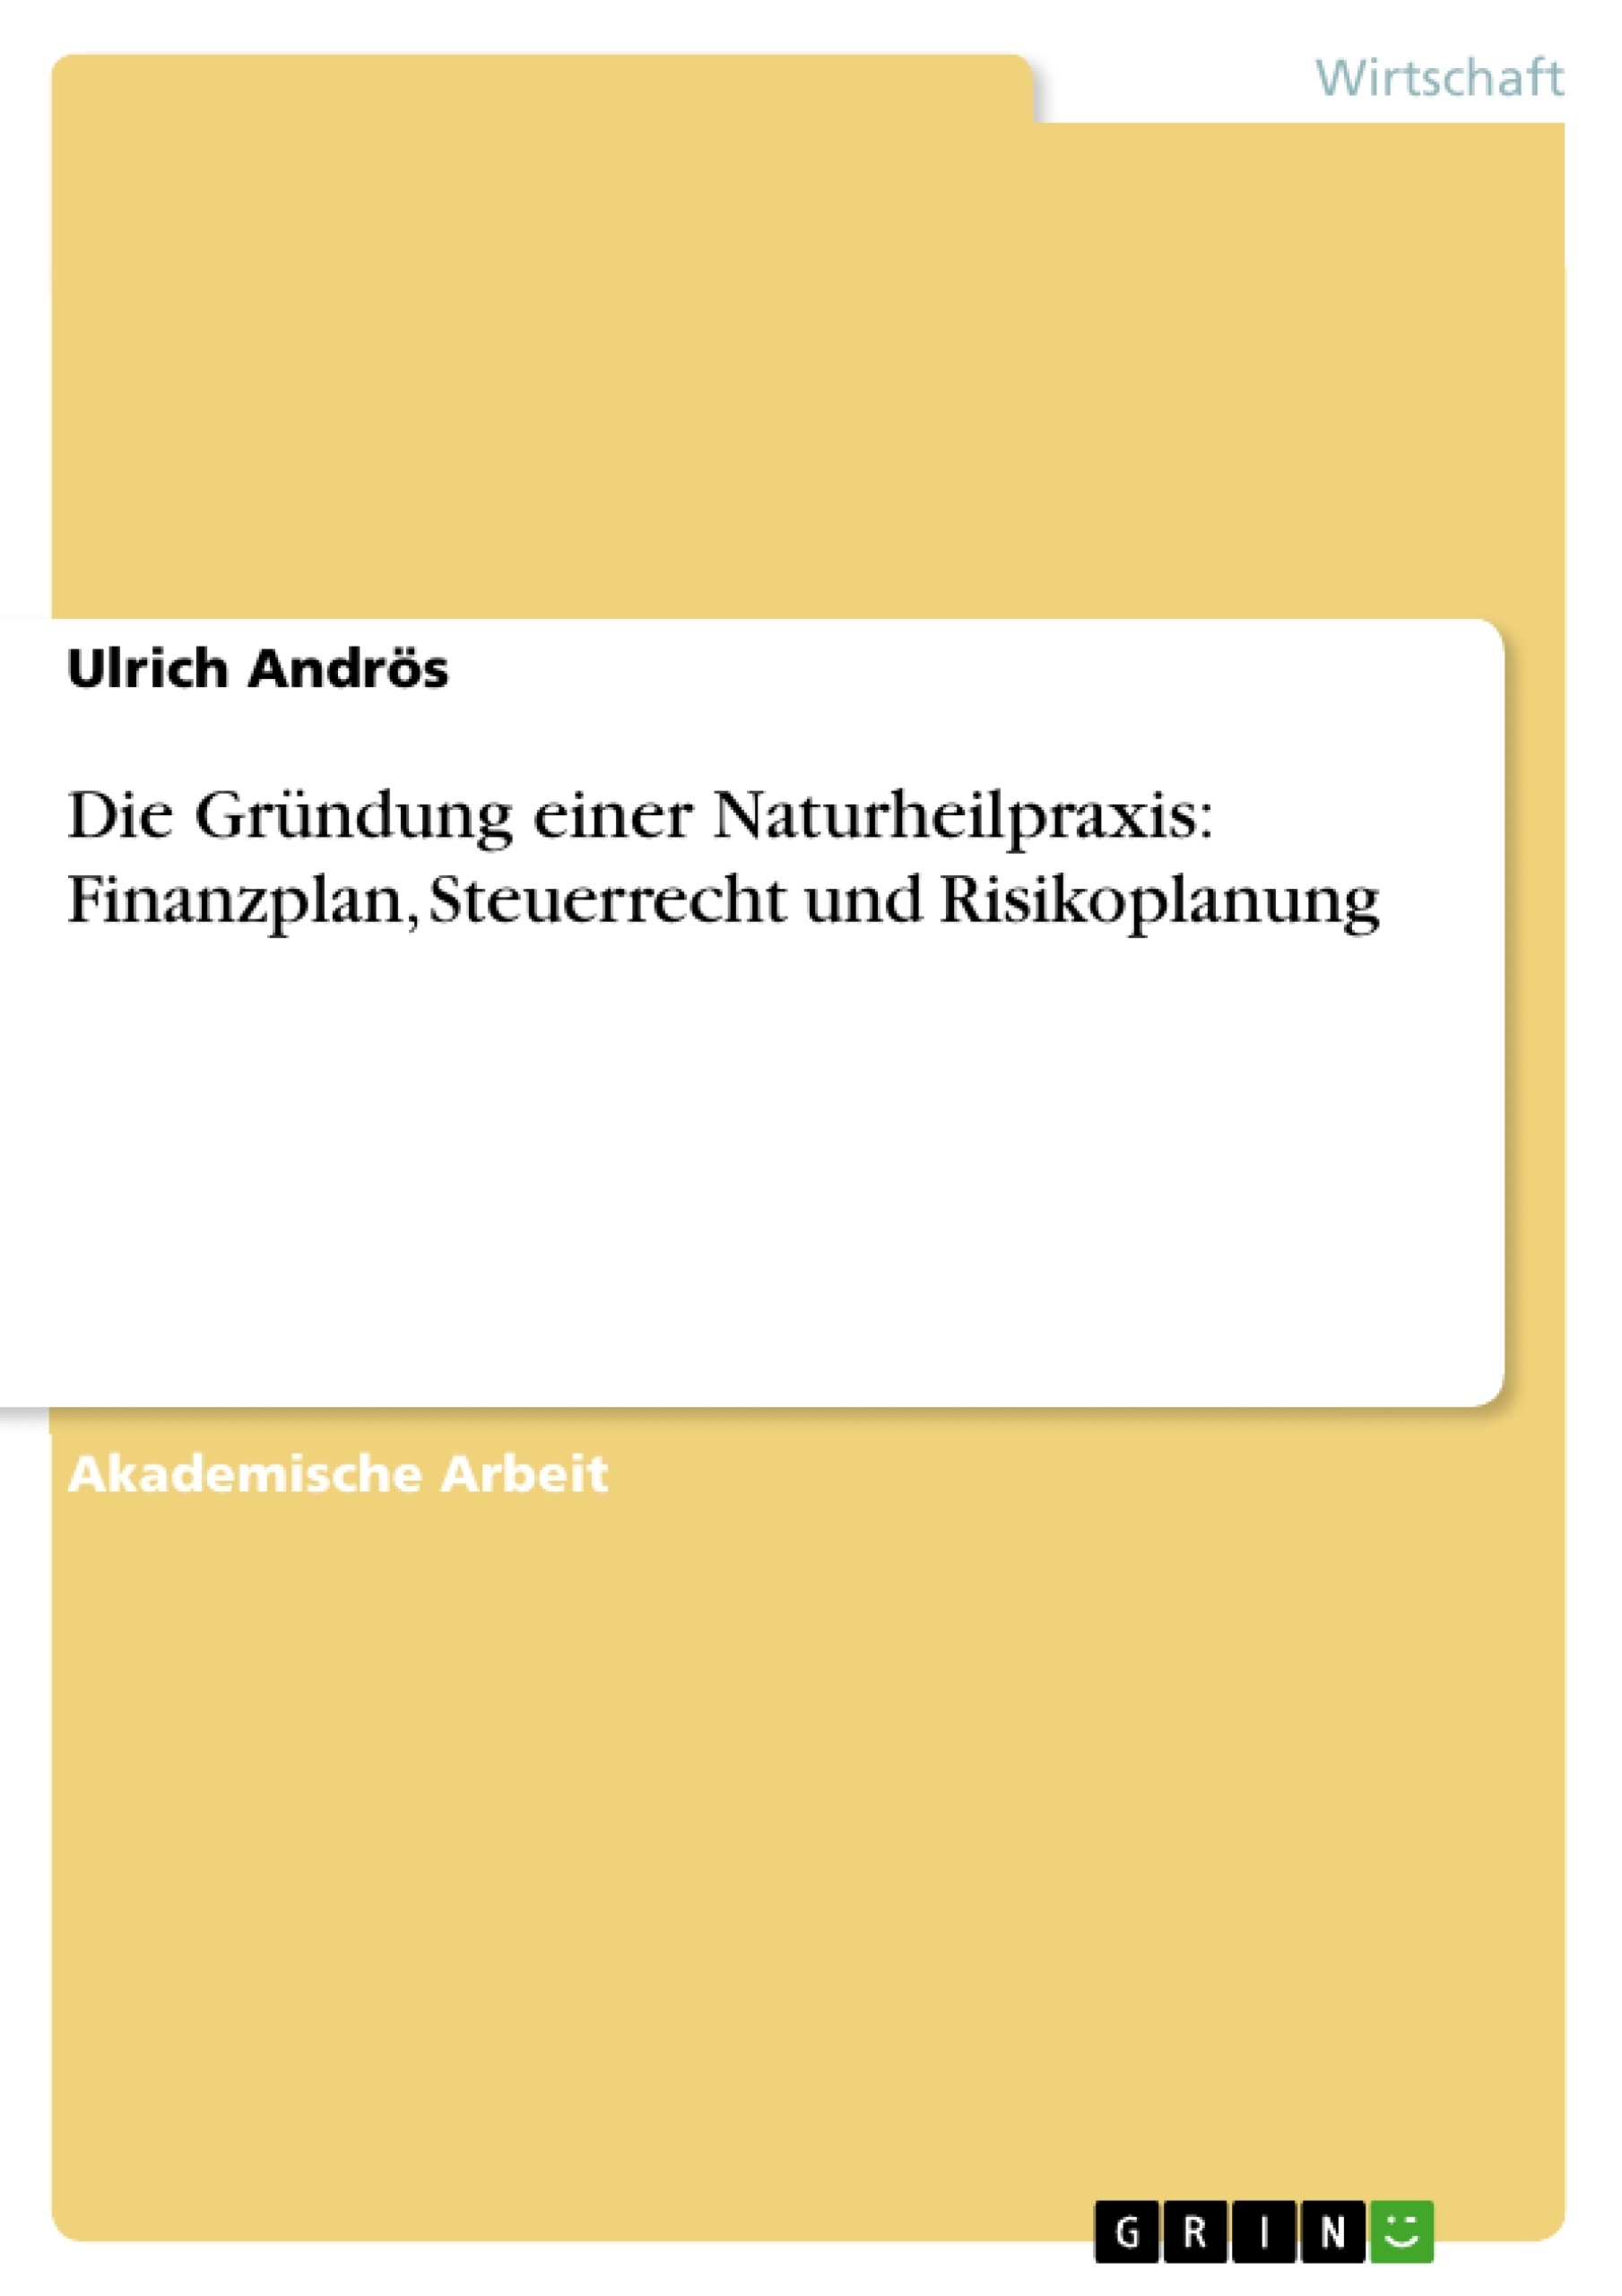 Title: Die Gründung einer Naturheilpraxis: Finanzplan, Steuerrecht und Risikoplanung